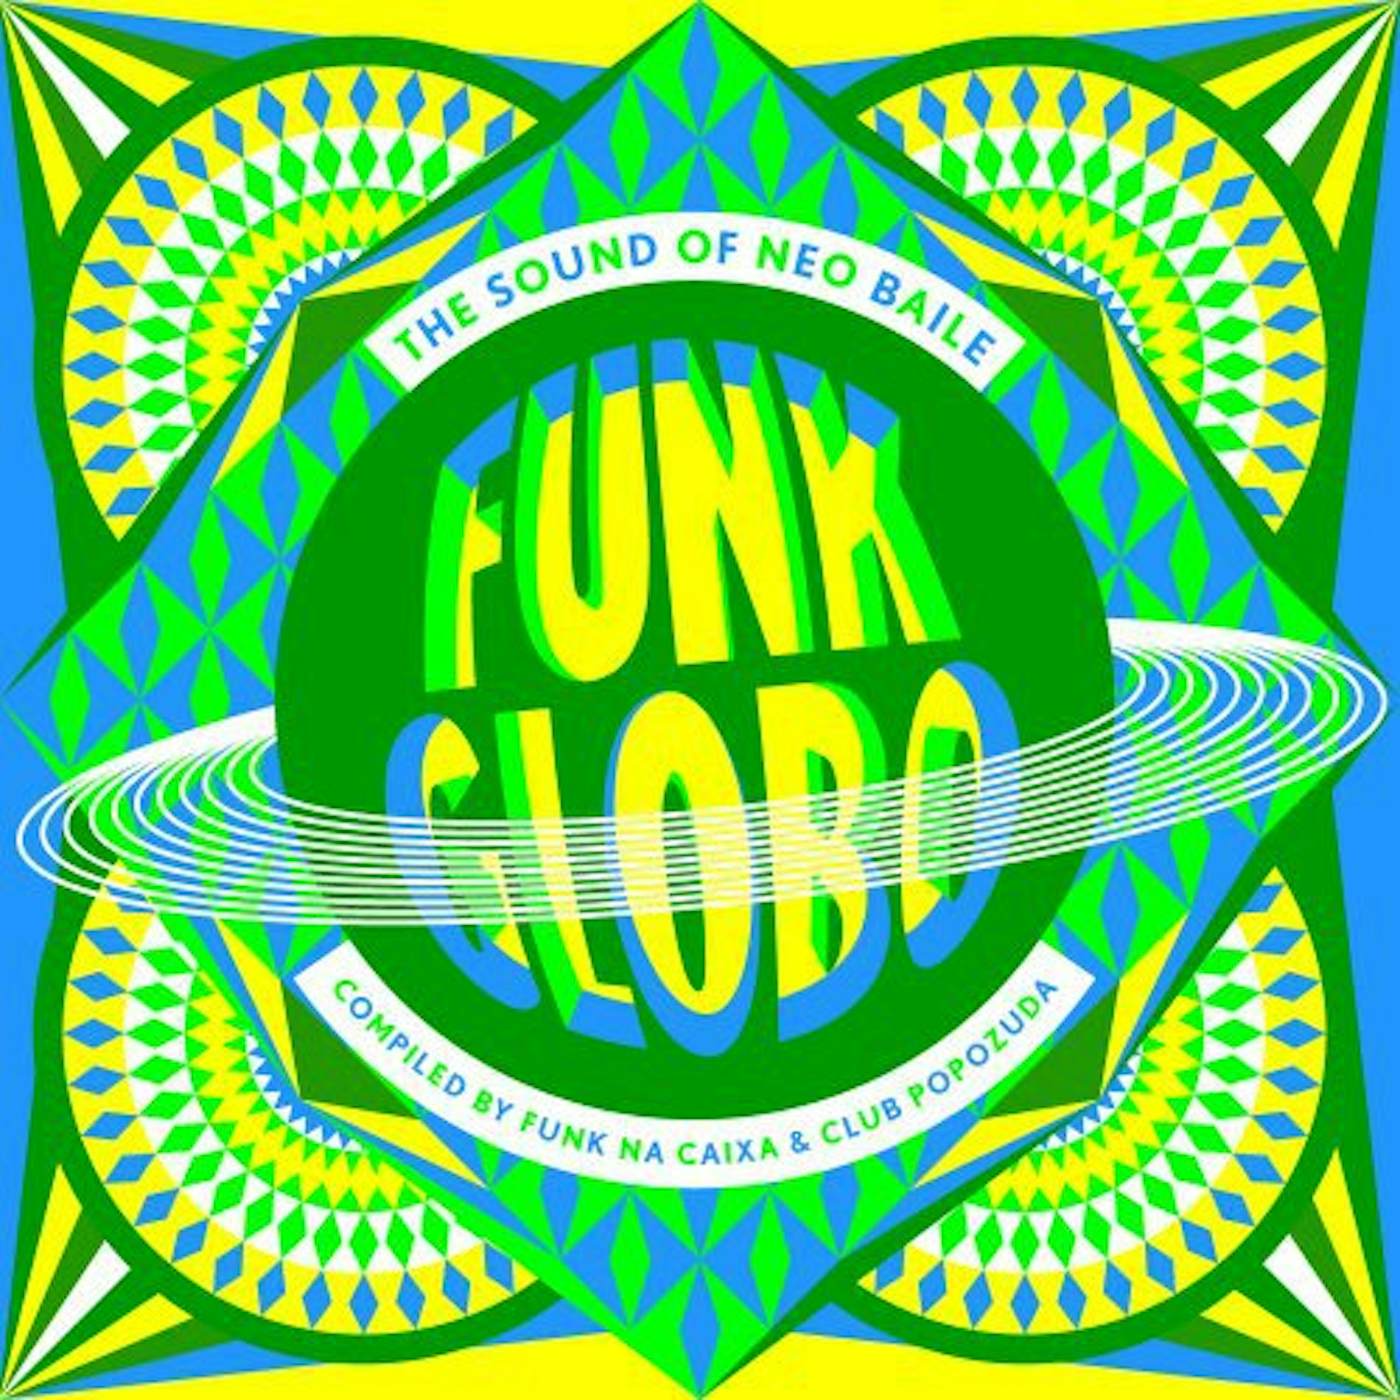 FUNK GLOBO: SOUND OF NEO BAILE / VARIOUS Vinyl Record